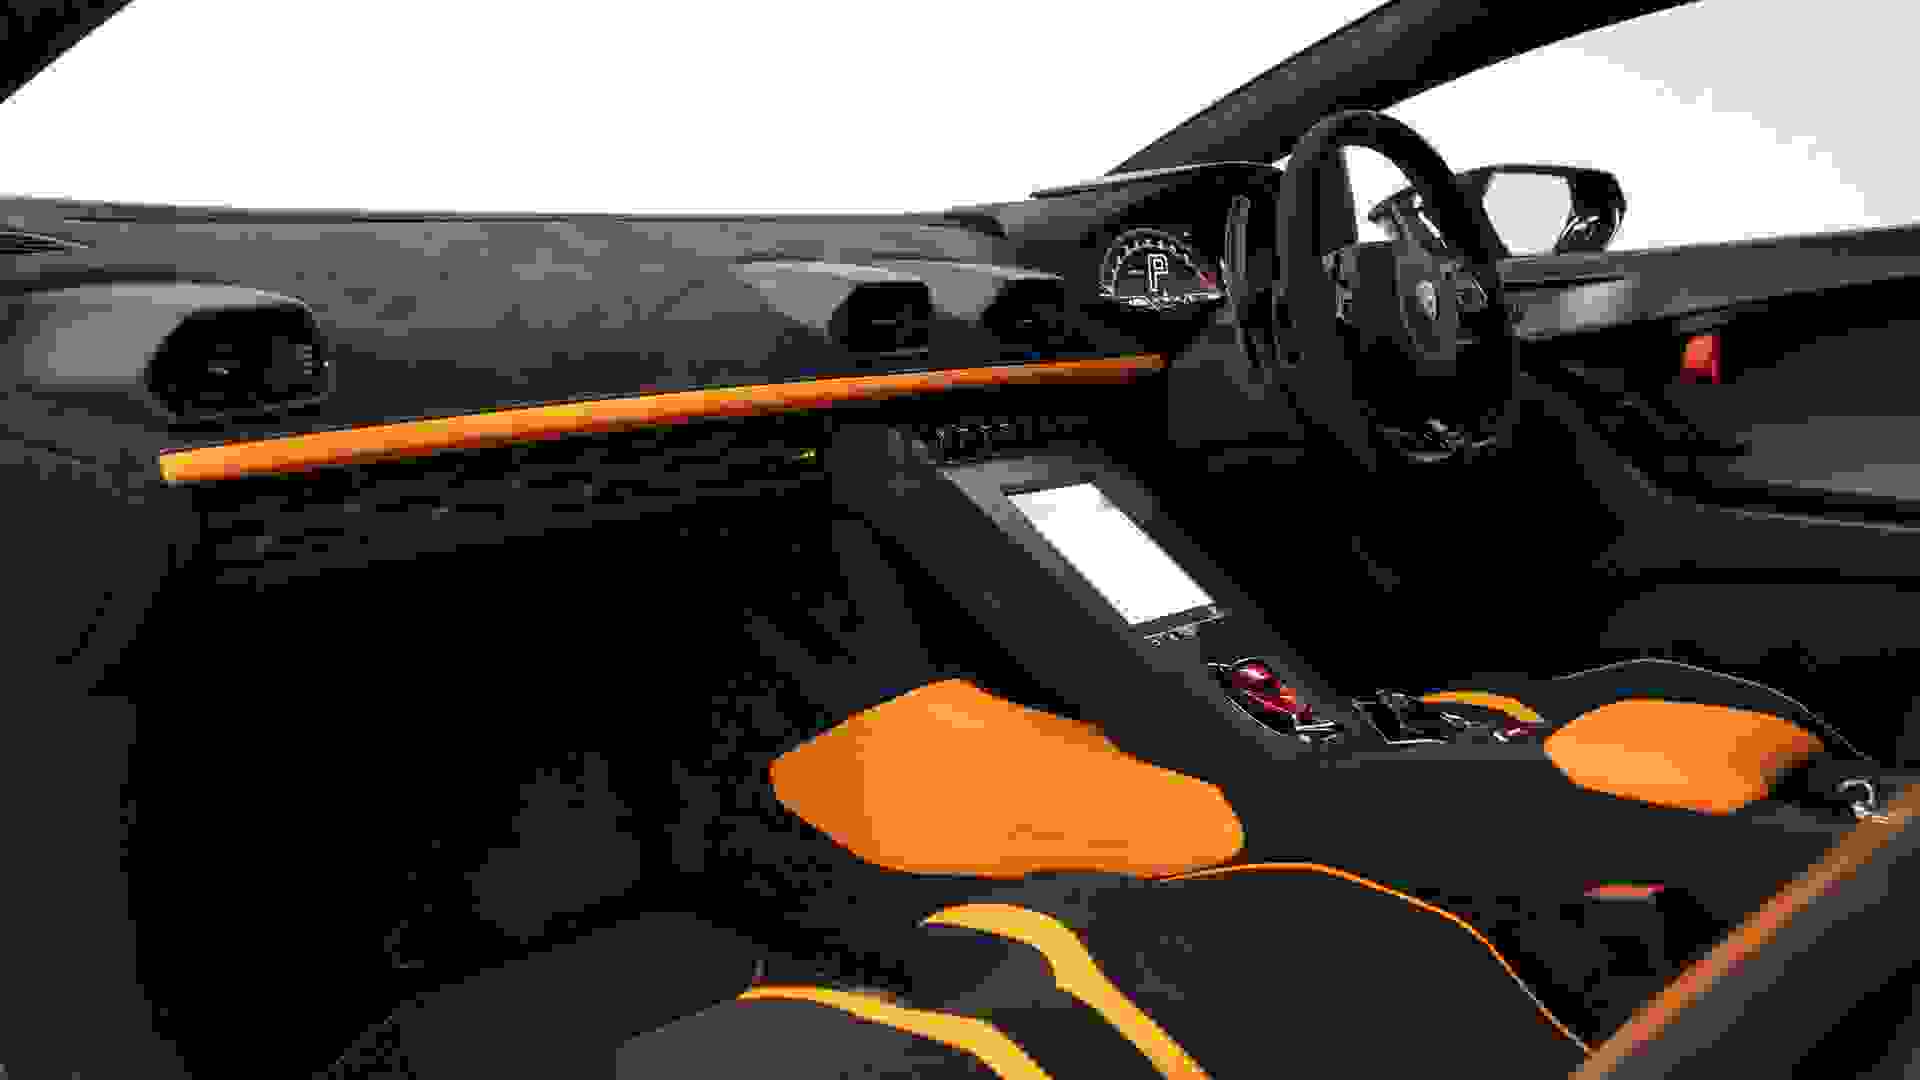 Lamborghini Huracan Photo 0d8b5f54-9ebf-4d46-94e9-40c76ecad398.jpg